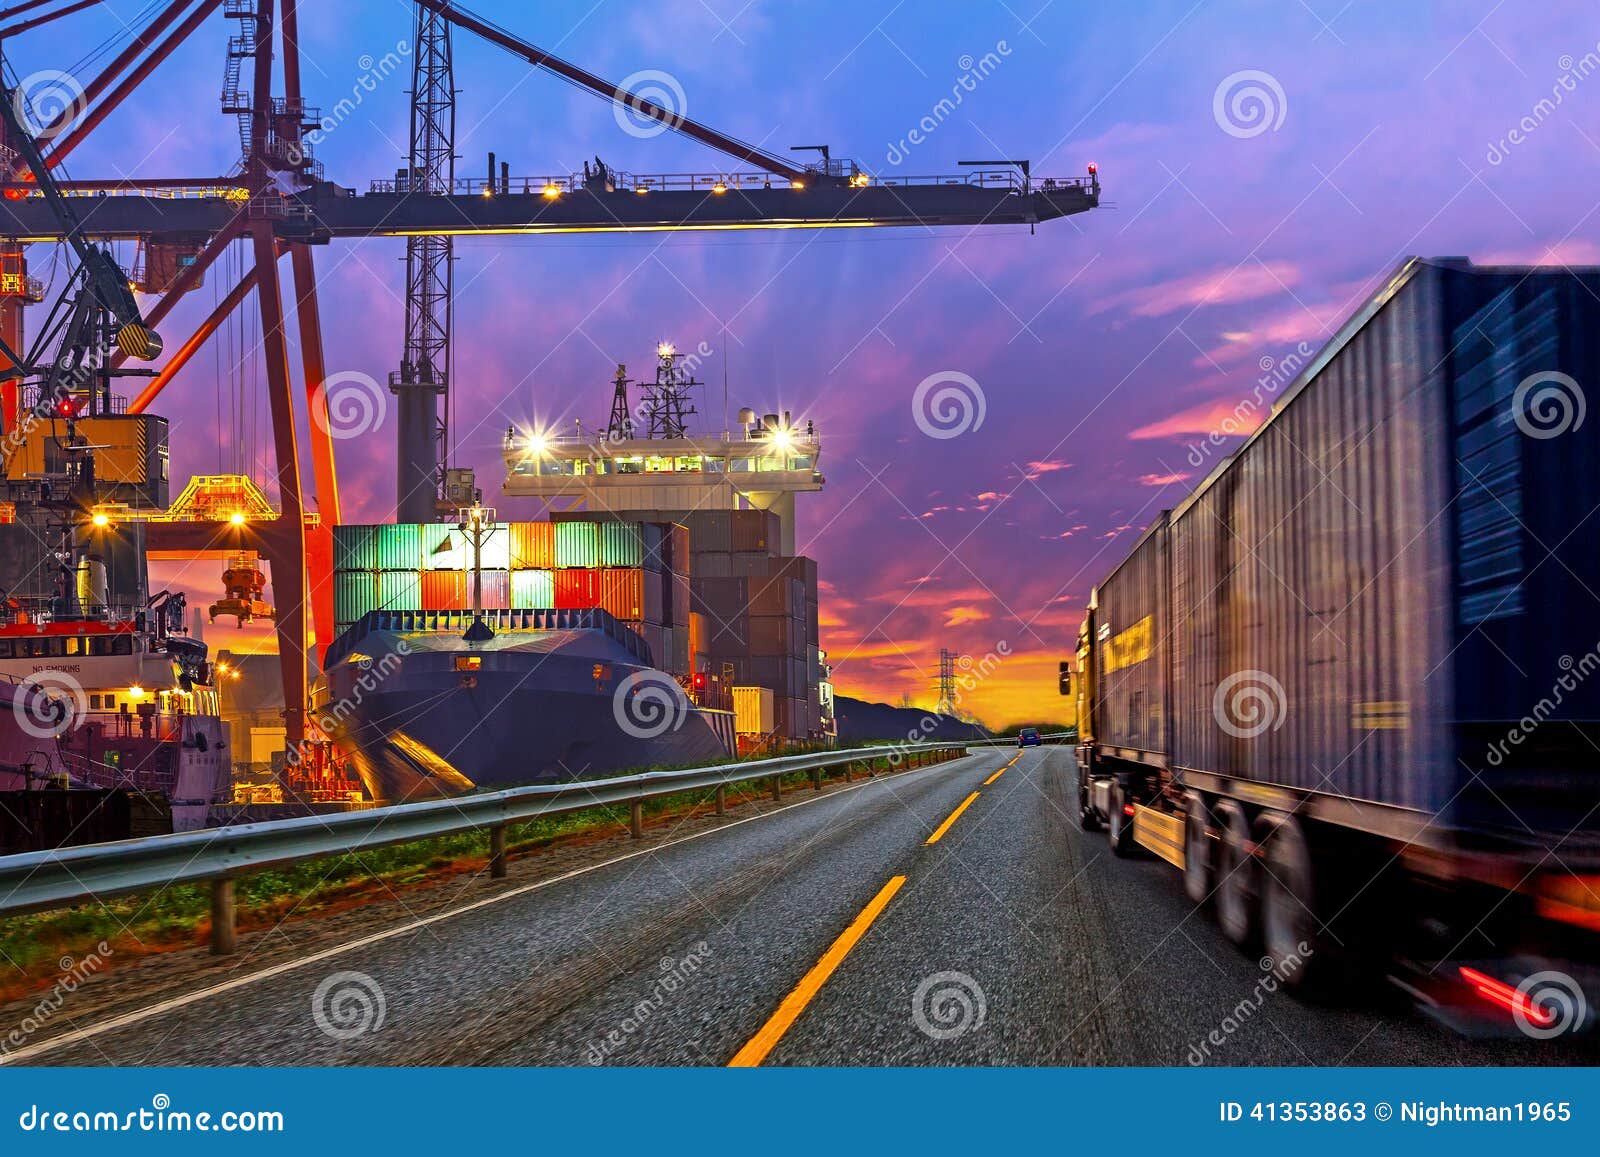 truck in port